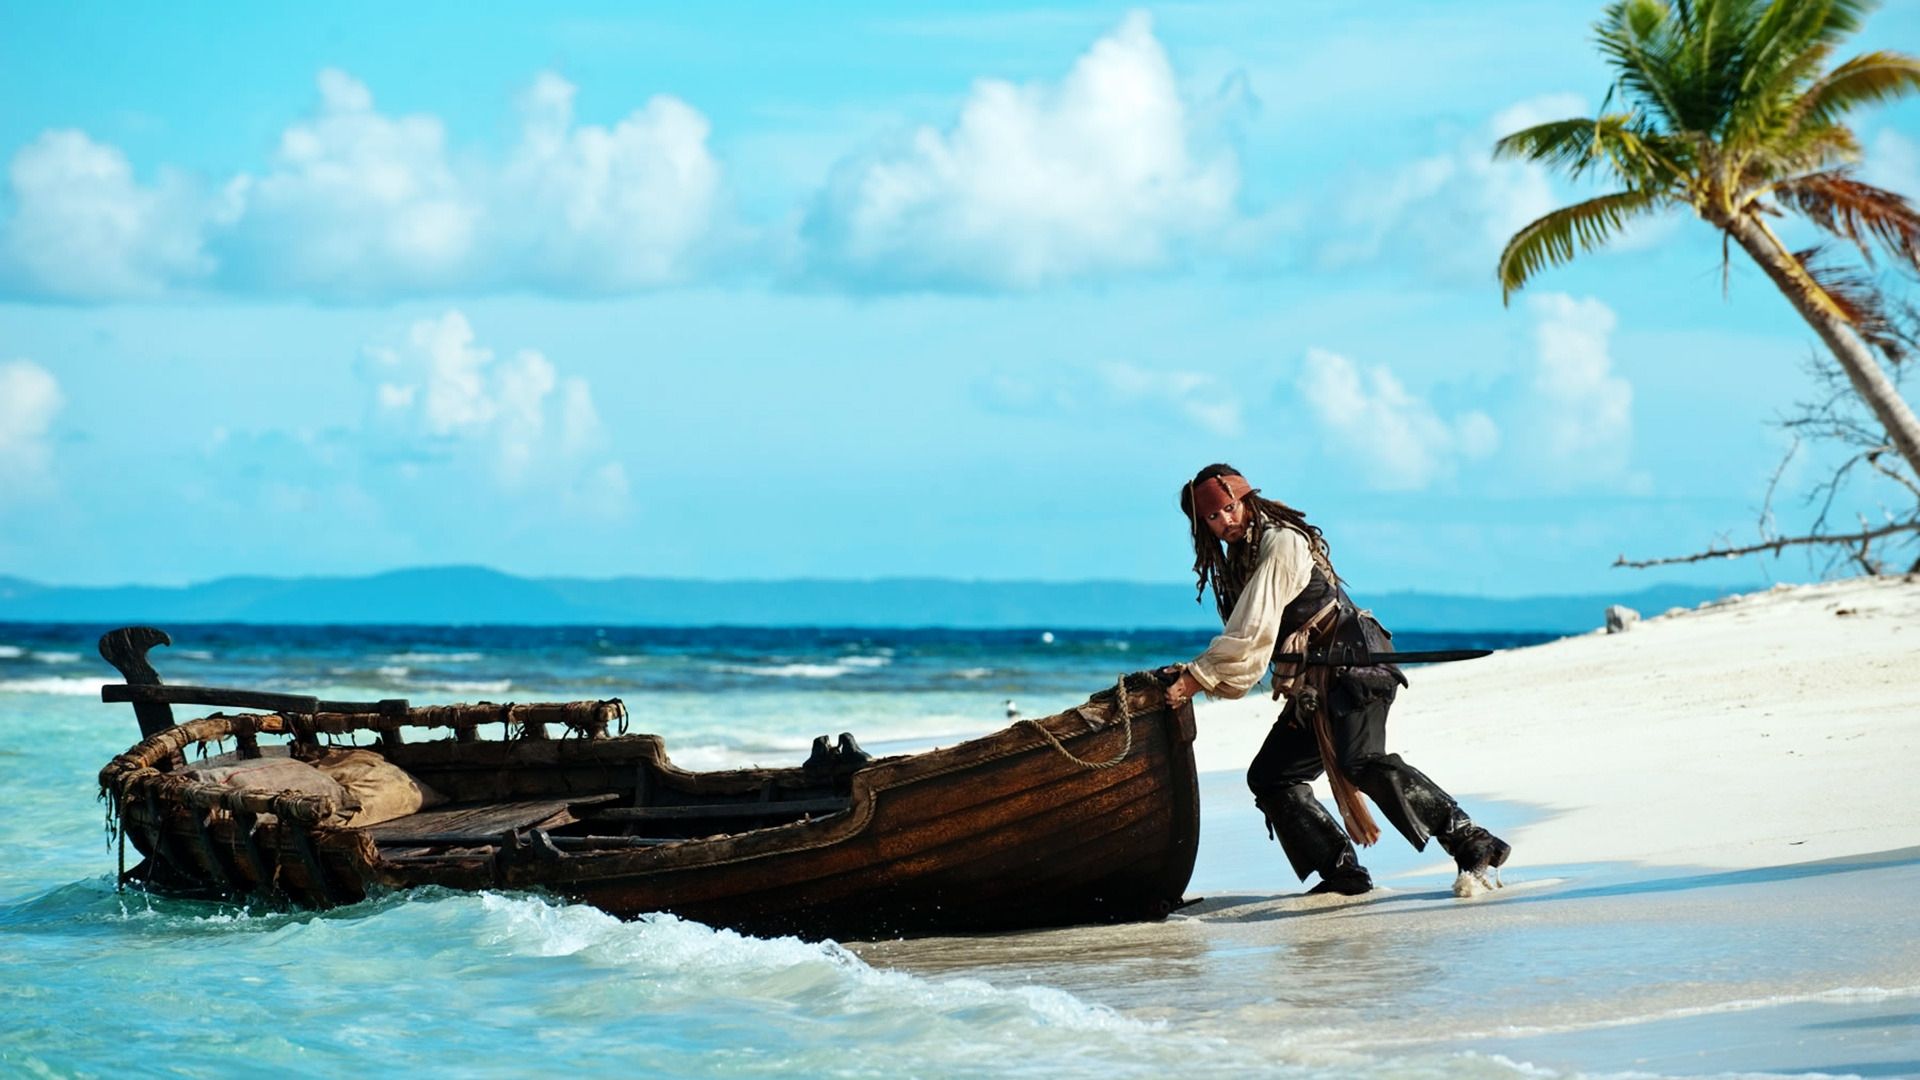 Jack Sparrow Pushing Boat Desktop Wallpaper